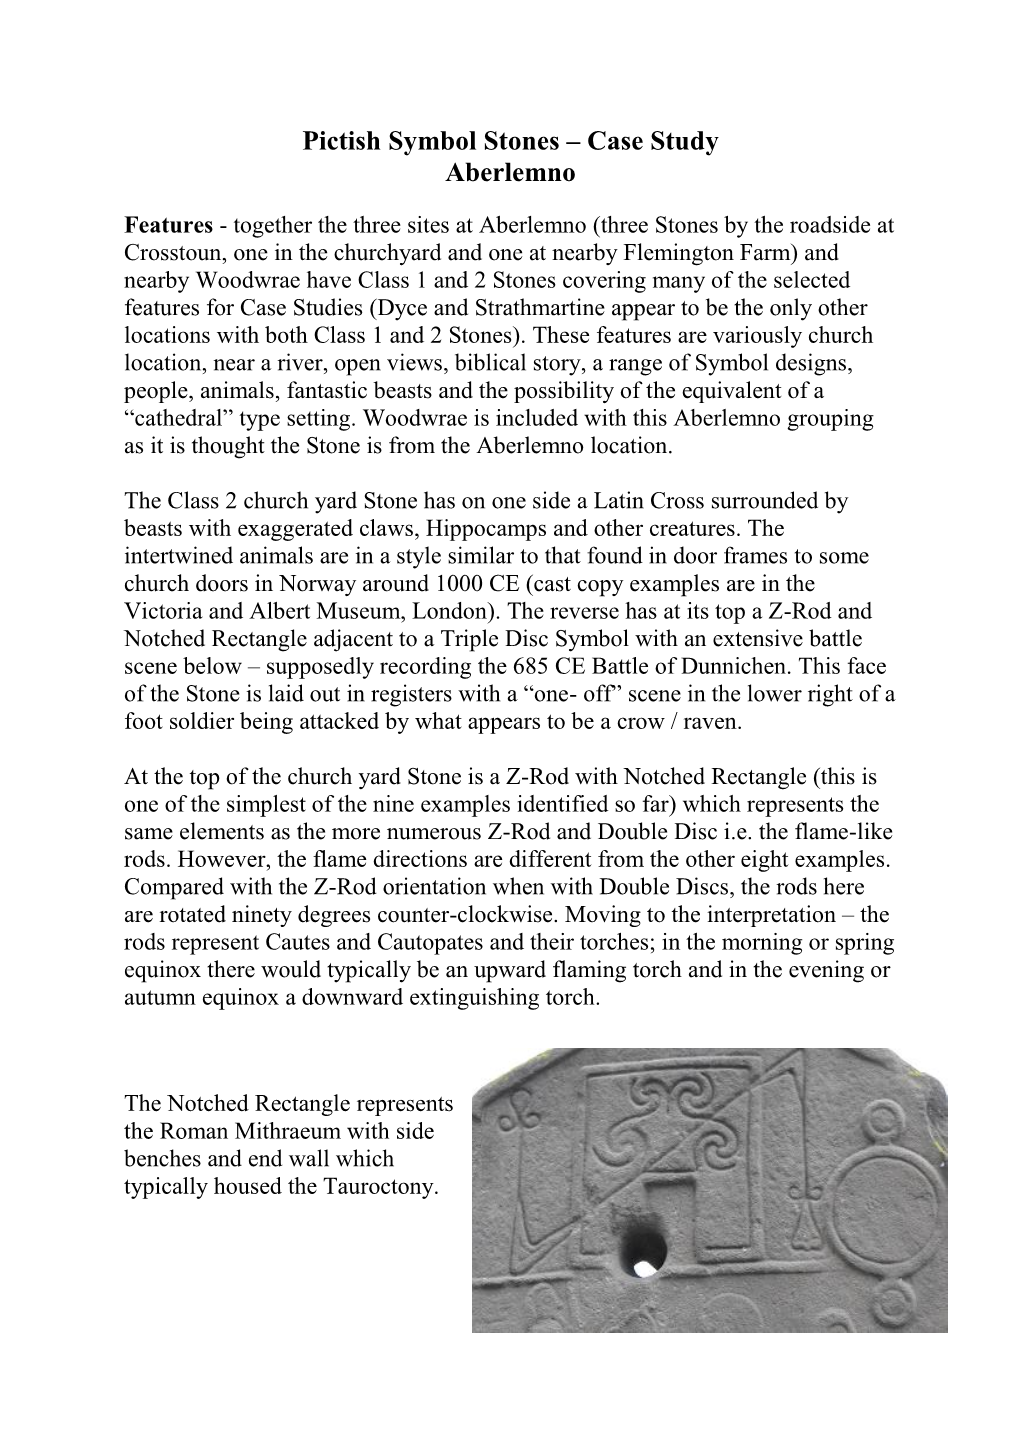 Pictish Symbol Stones – Case Study Aberlemno